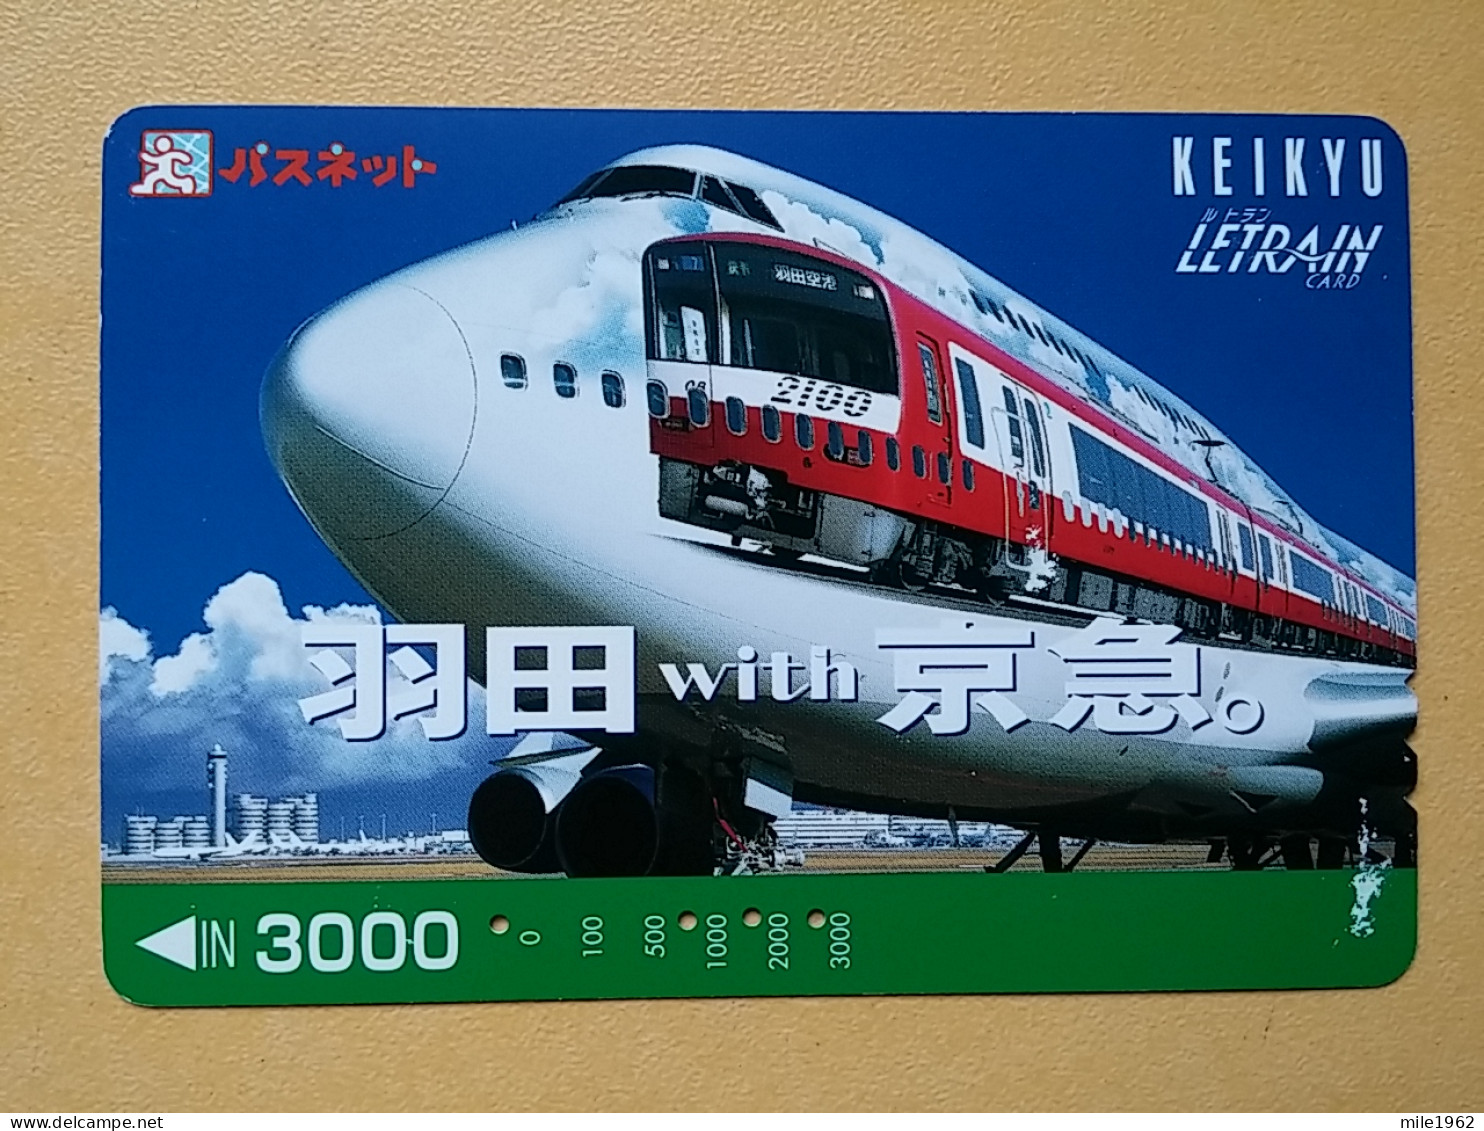 T-451 - JAPAN, Japon, Nipon, Carte Prepayee, Prepaid Card, Avion, Plane, Avio - Aviones